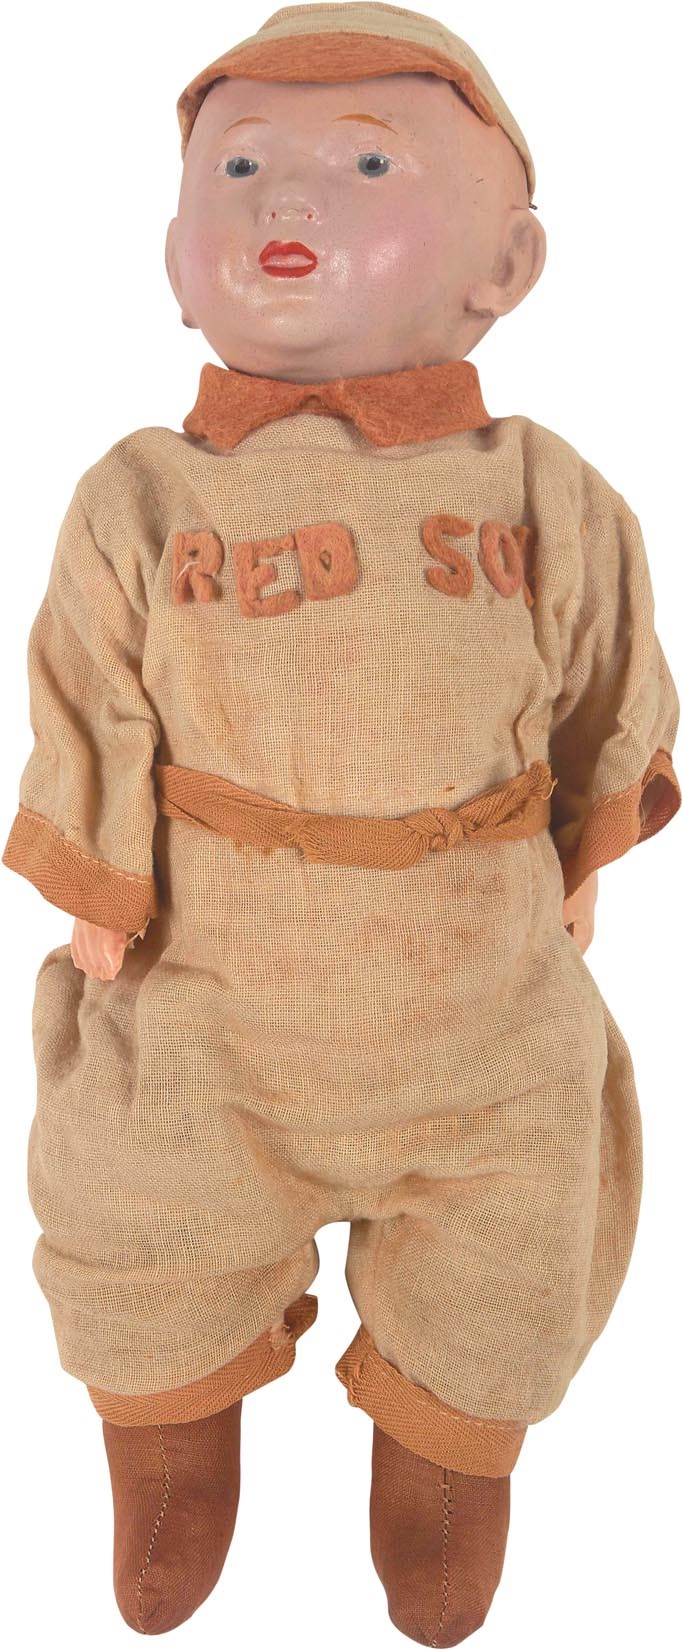 Early Baseball - Early 1900s Boston Red Sox Doll